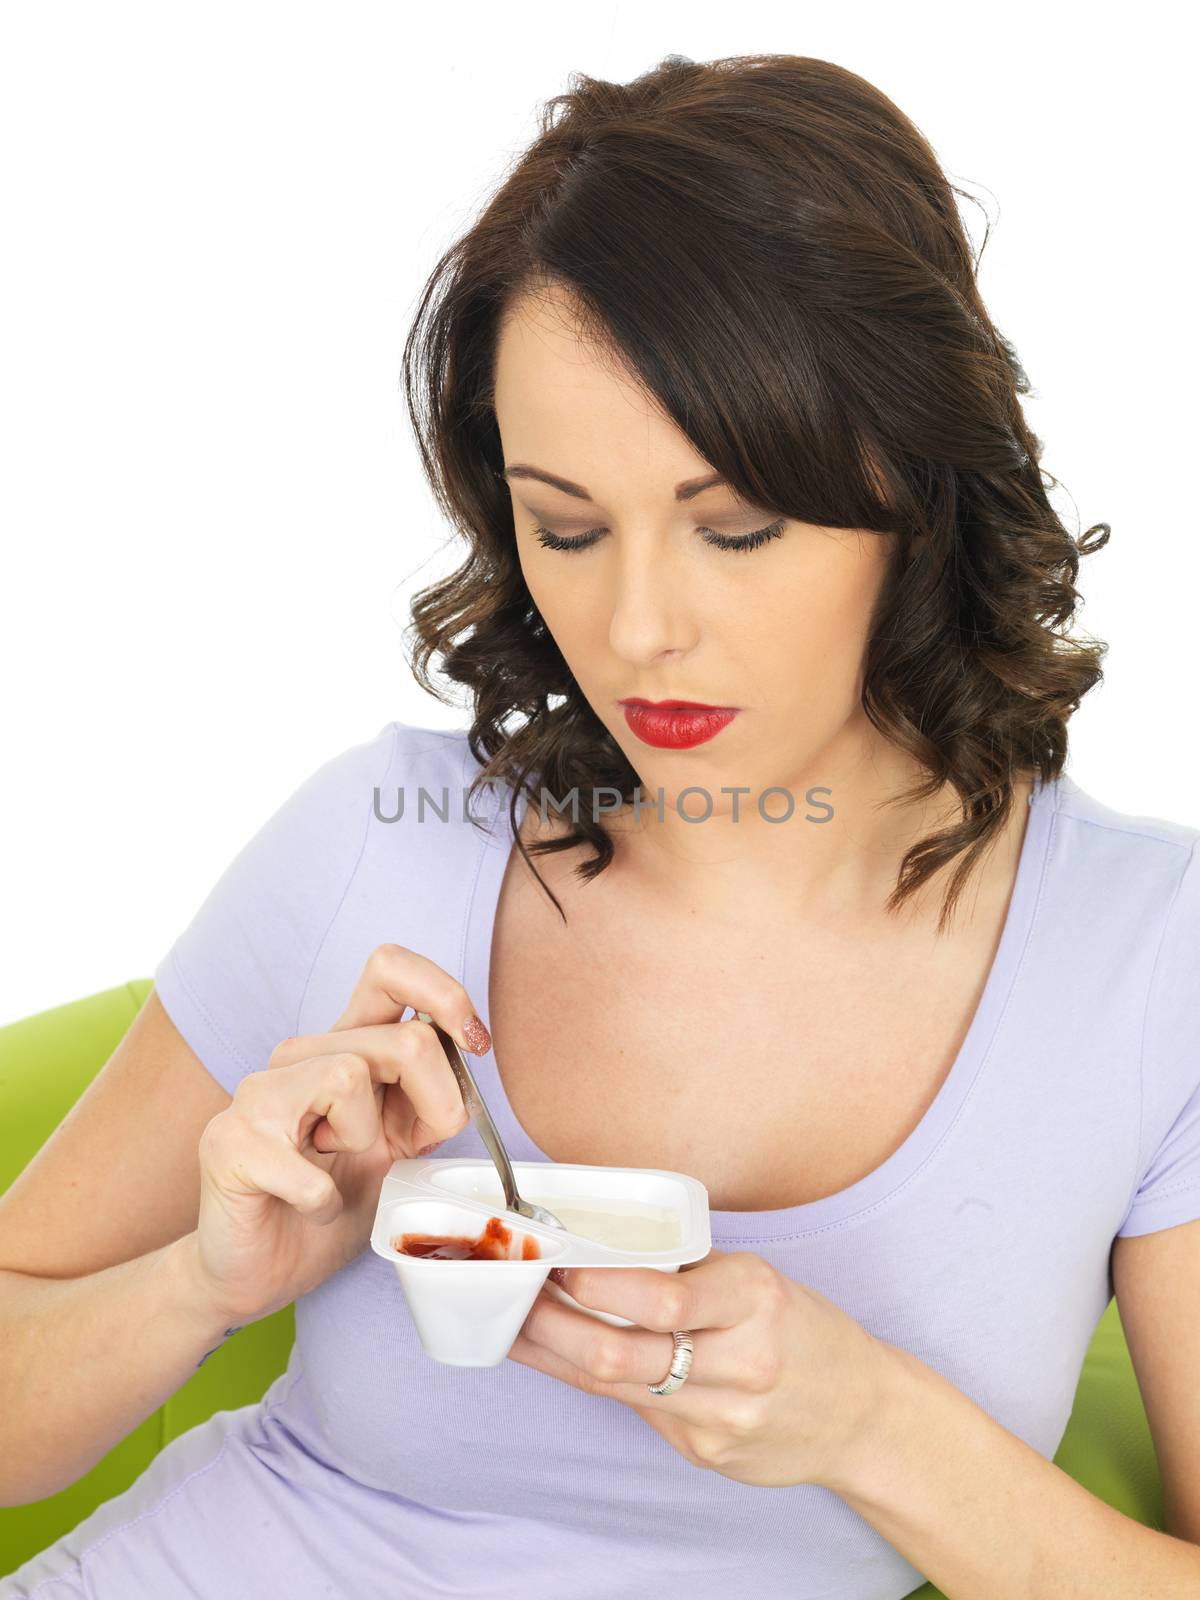 Young Woman Eating a Yogurt by Whiteboxmedia